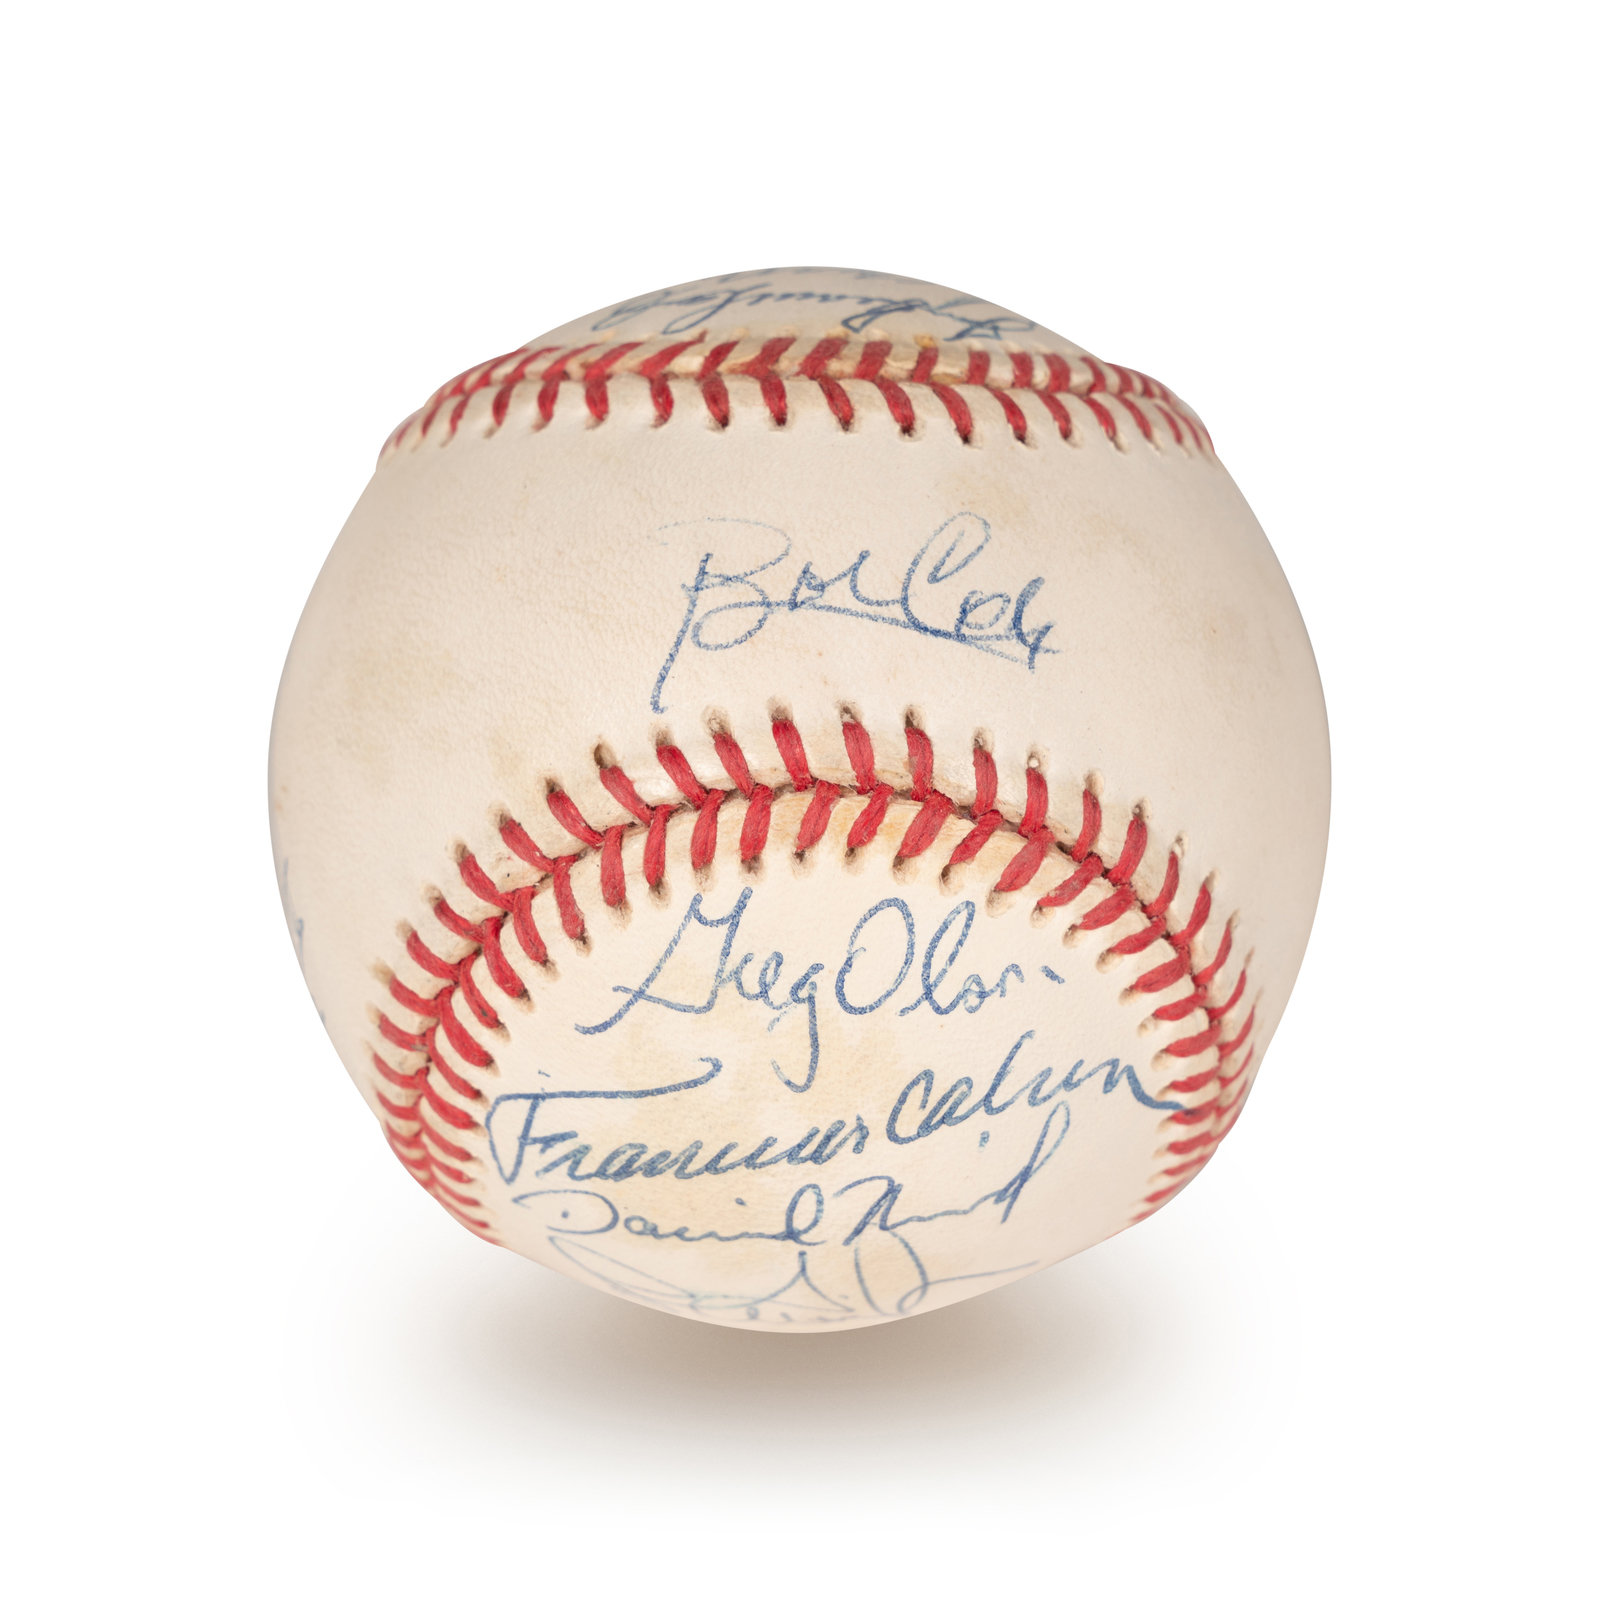 Sold at Auction: Atlanta Braves Tom Glavine Signed Baseball Jersey